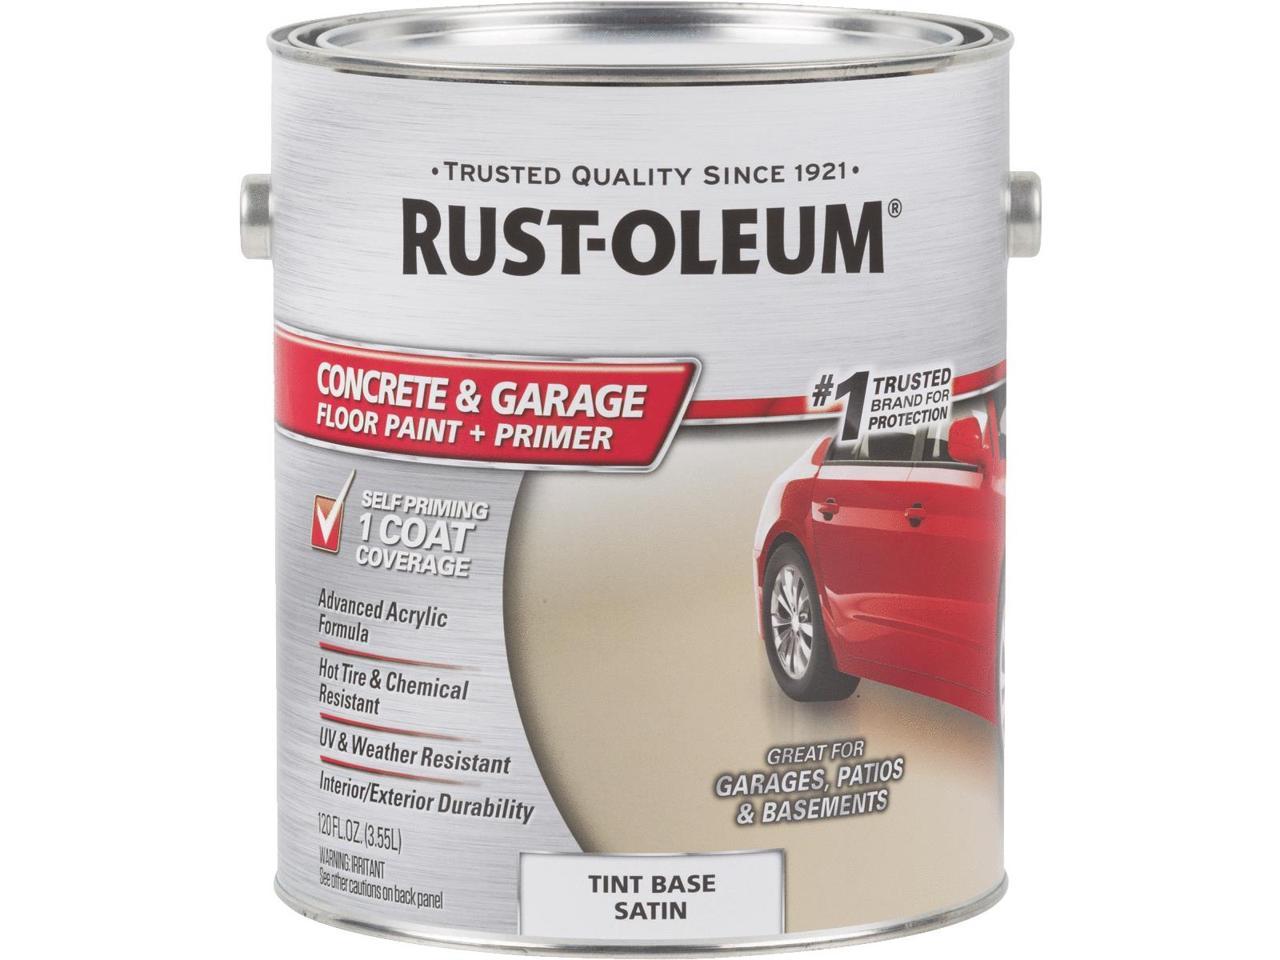 RustOleum Concrete & Garage Floor Paint & Primer, 1 Gal